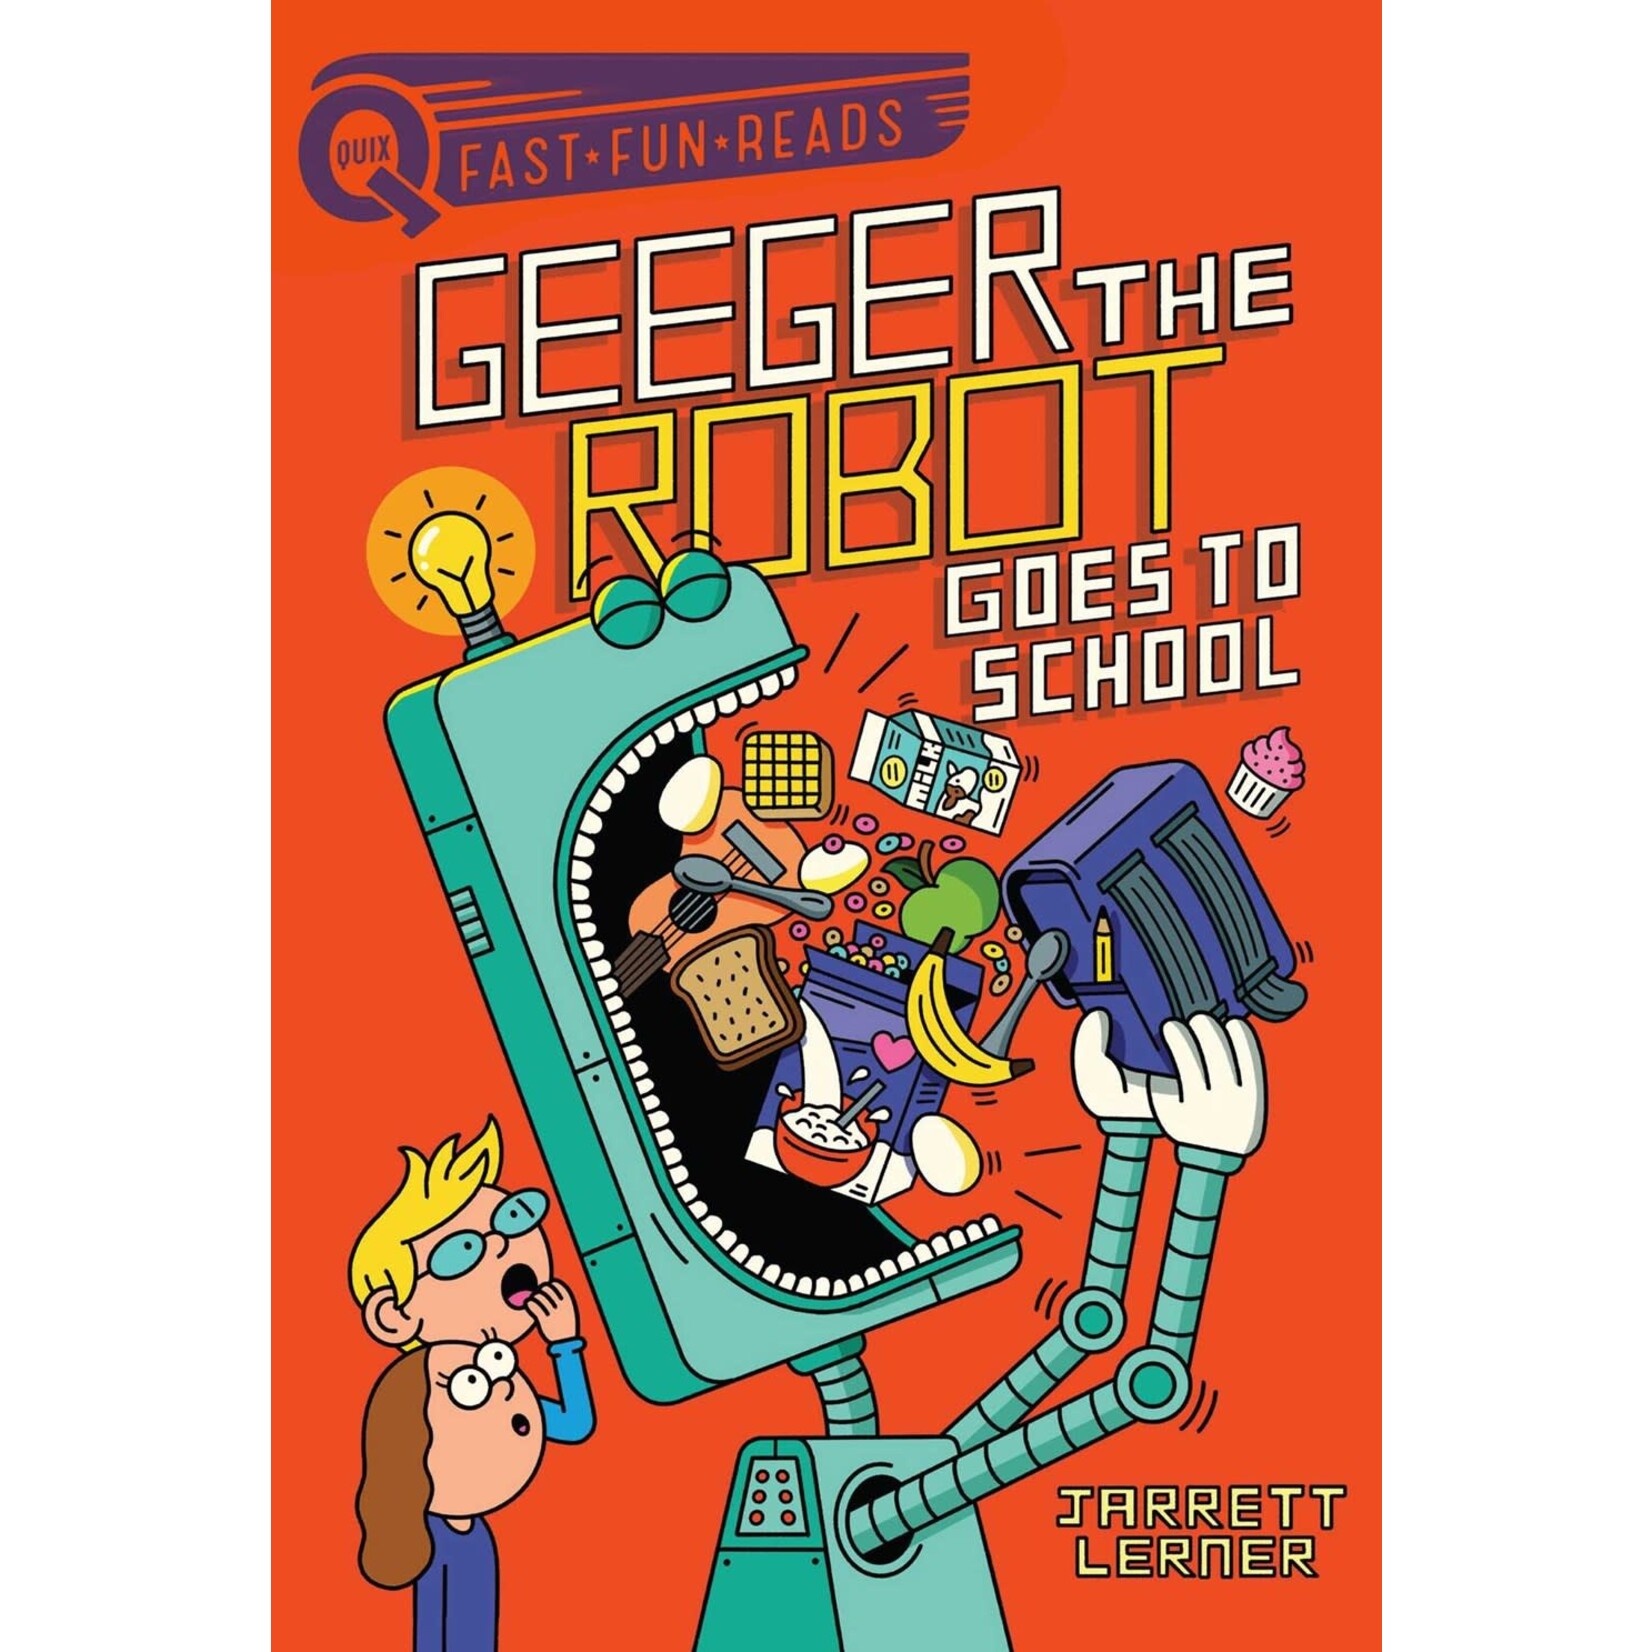 Geeger the Robot Goes to School: A QUIX Book (Geeger the Robot #1)